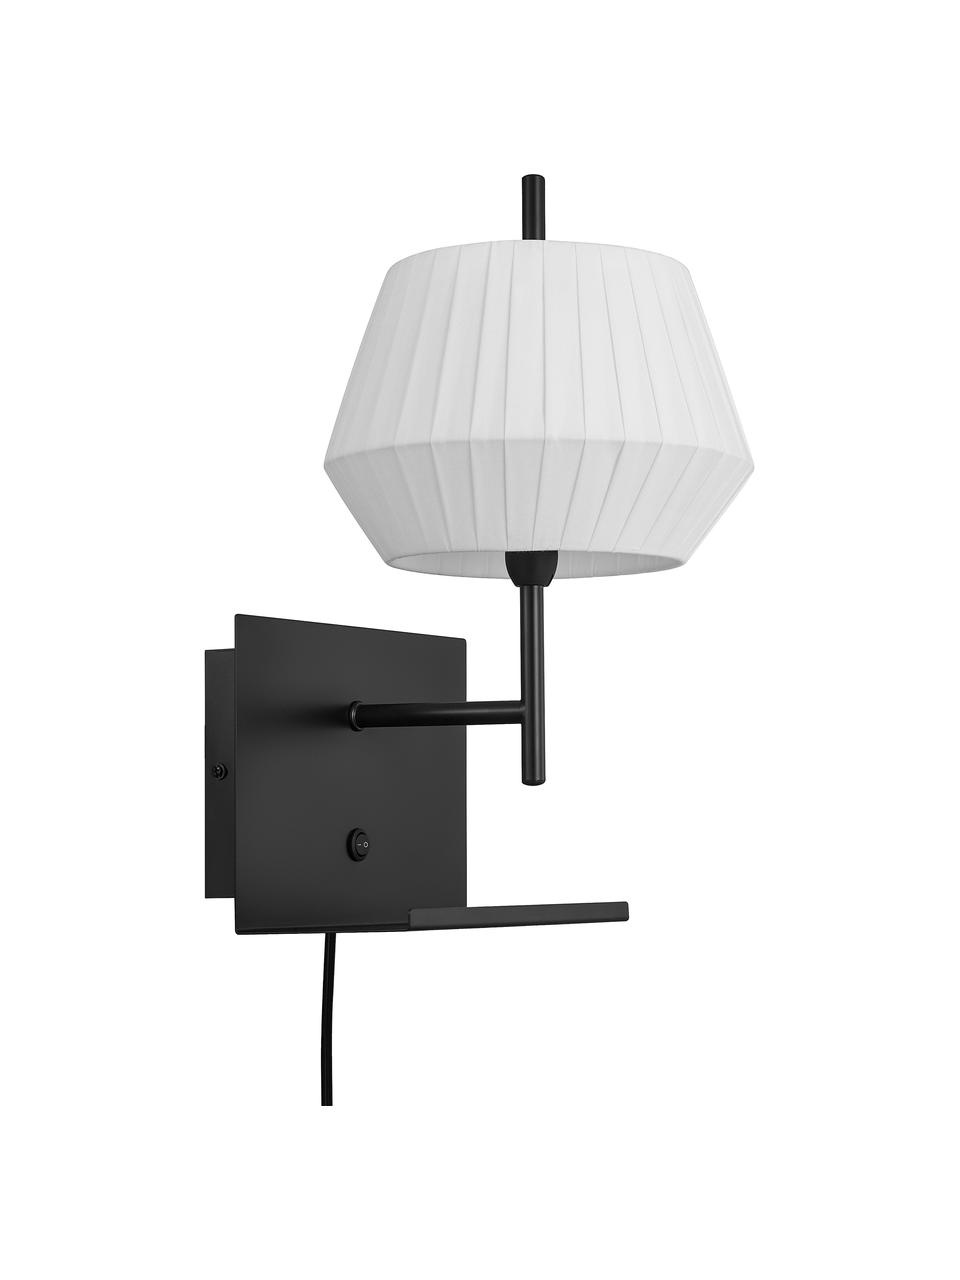 Klassieke wandlamp Dicte met stekker, Lampenkap: stof, Wit, zwart, 21 x 38 cm